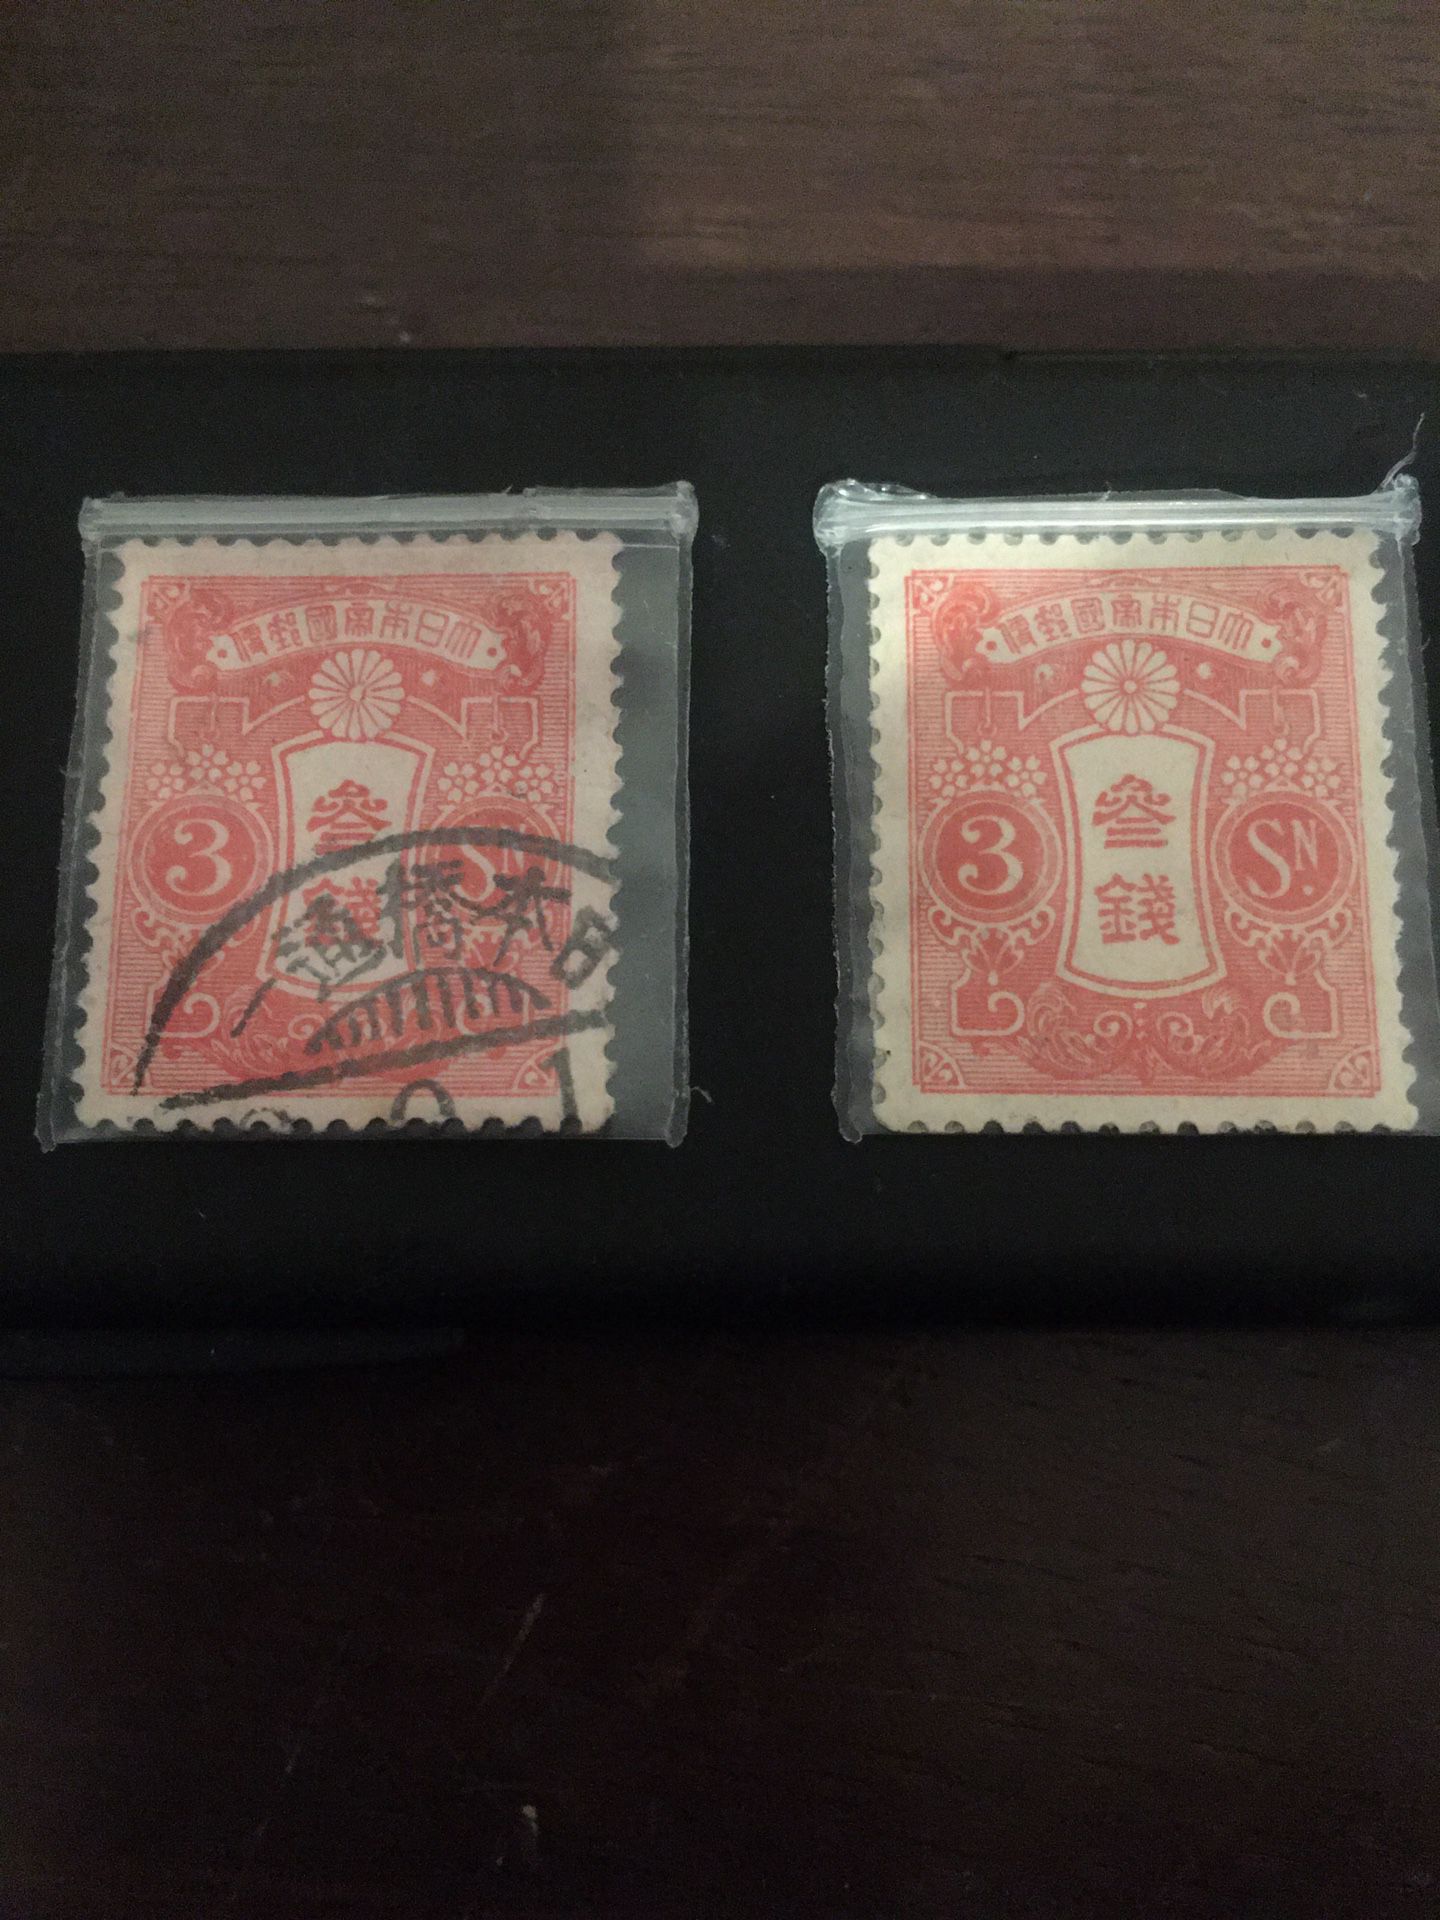 Japan Quingdao 1921 3 Sen Stamp